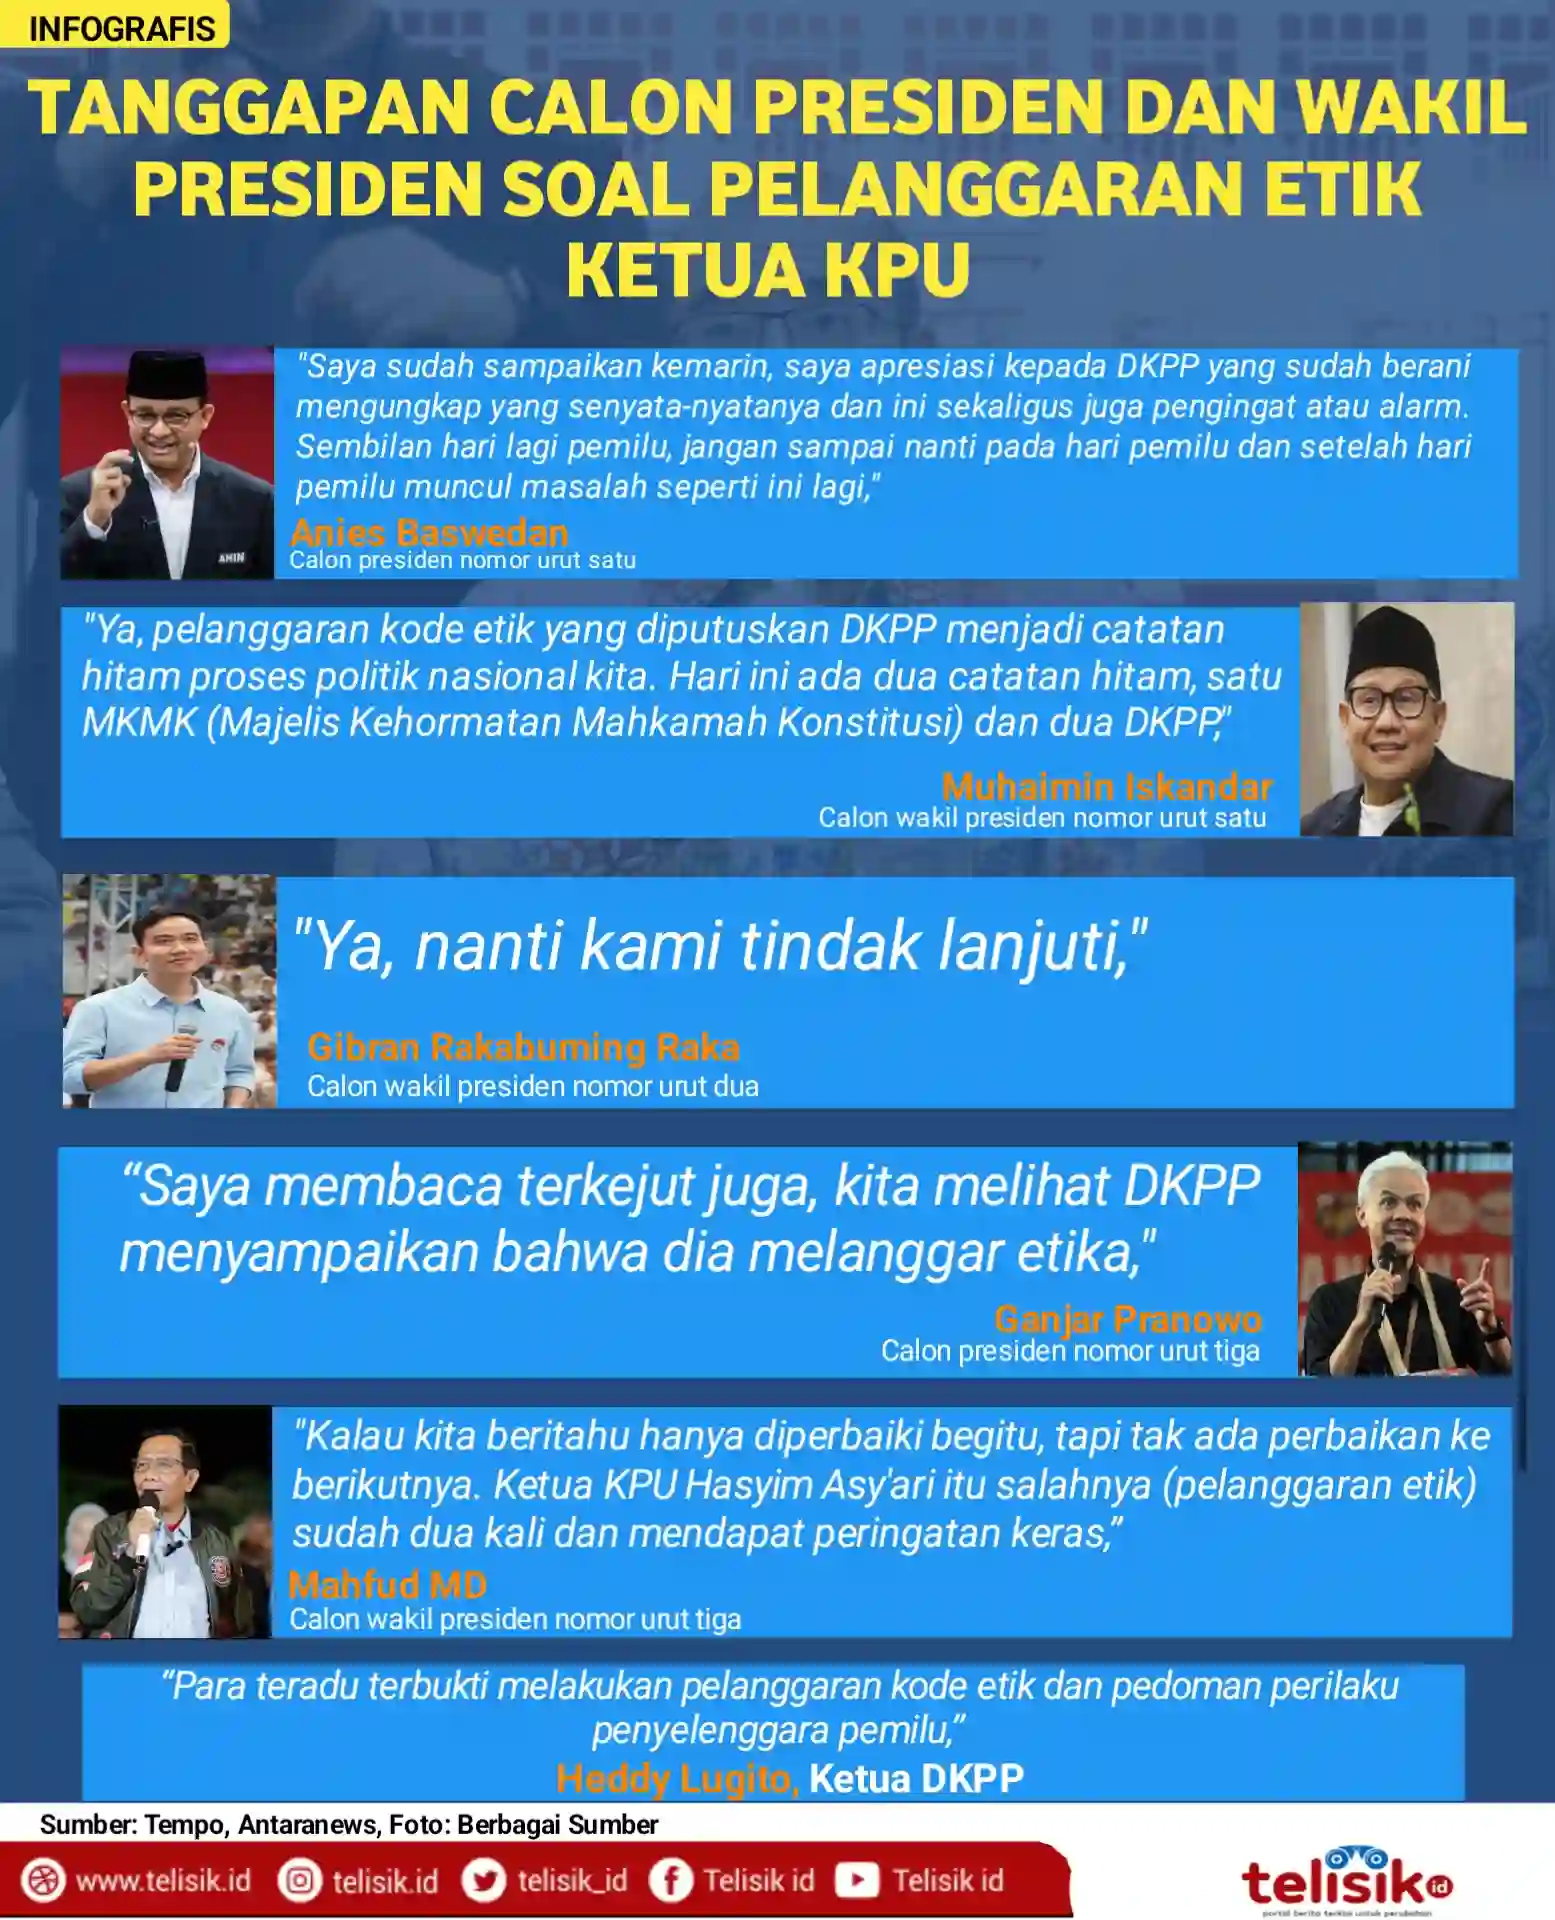 Infografis: Tanggapan Calon Presiden dan Wakil Presiden Soal Pelanggaran Etik Ketua KPU